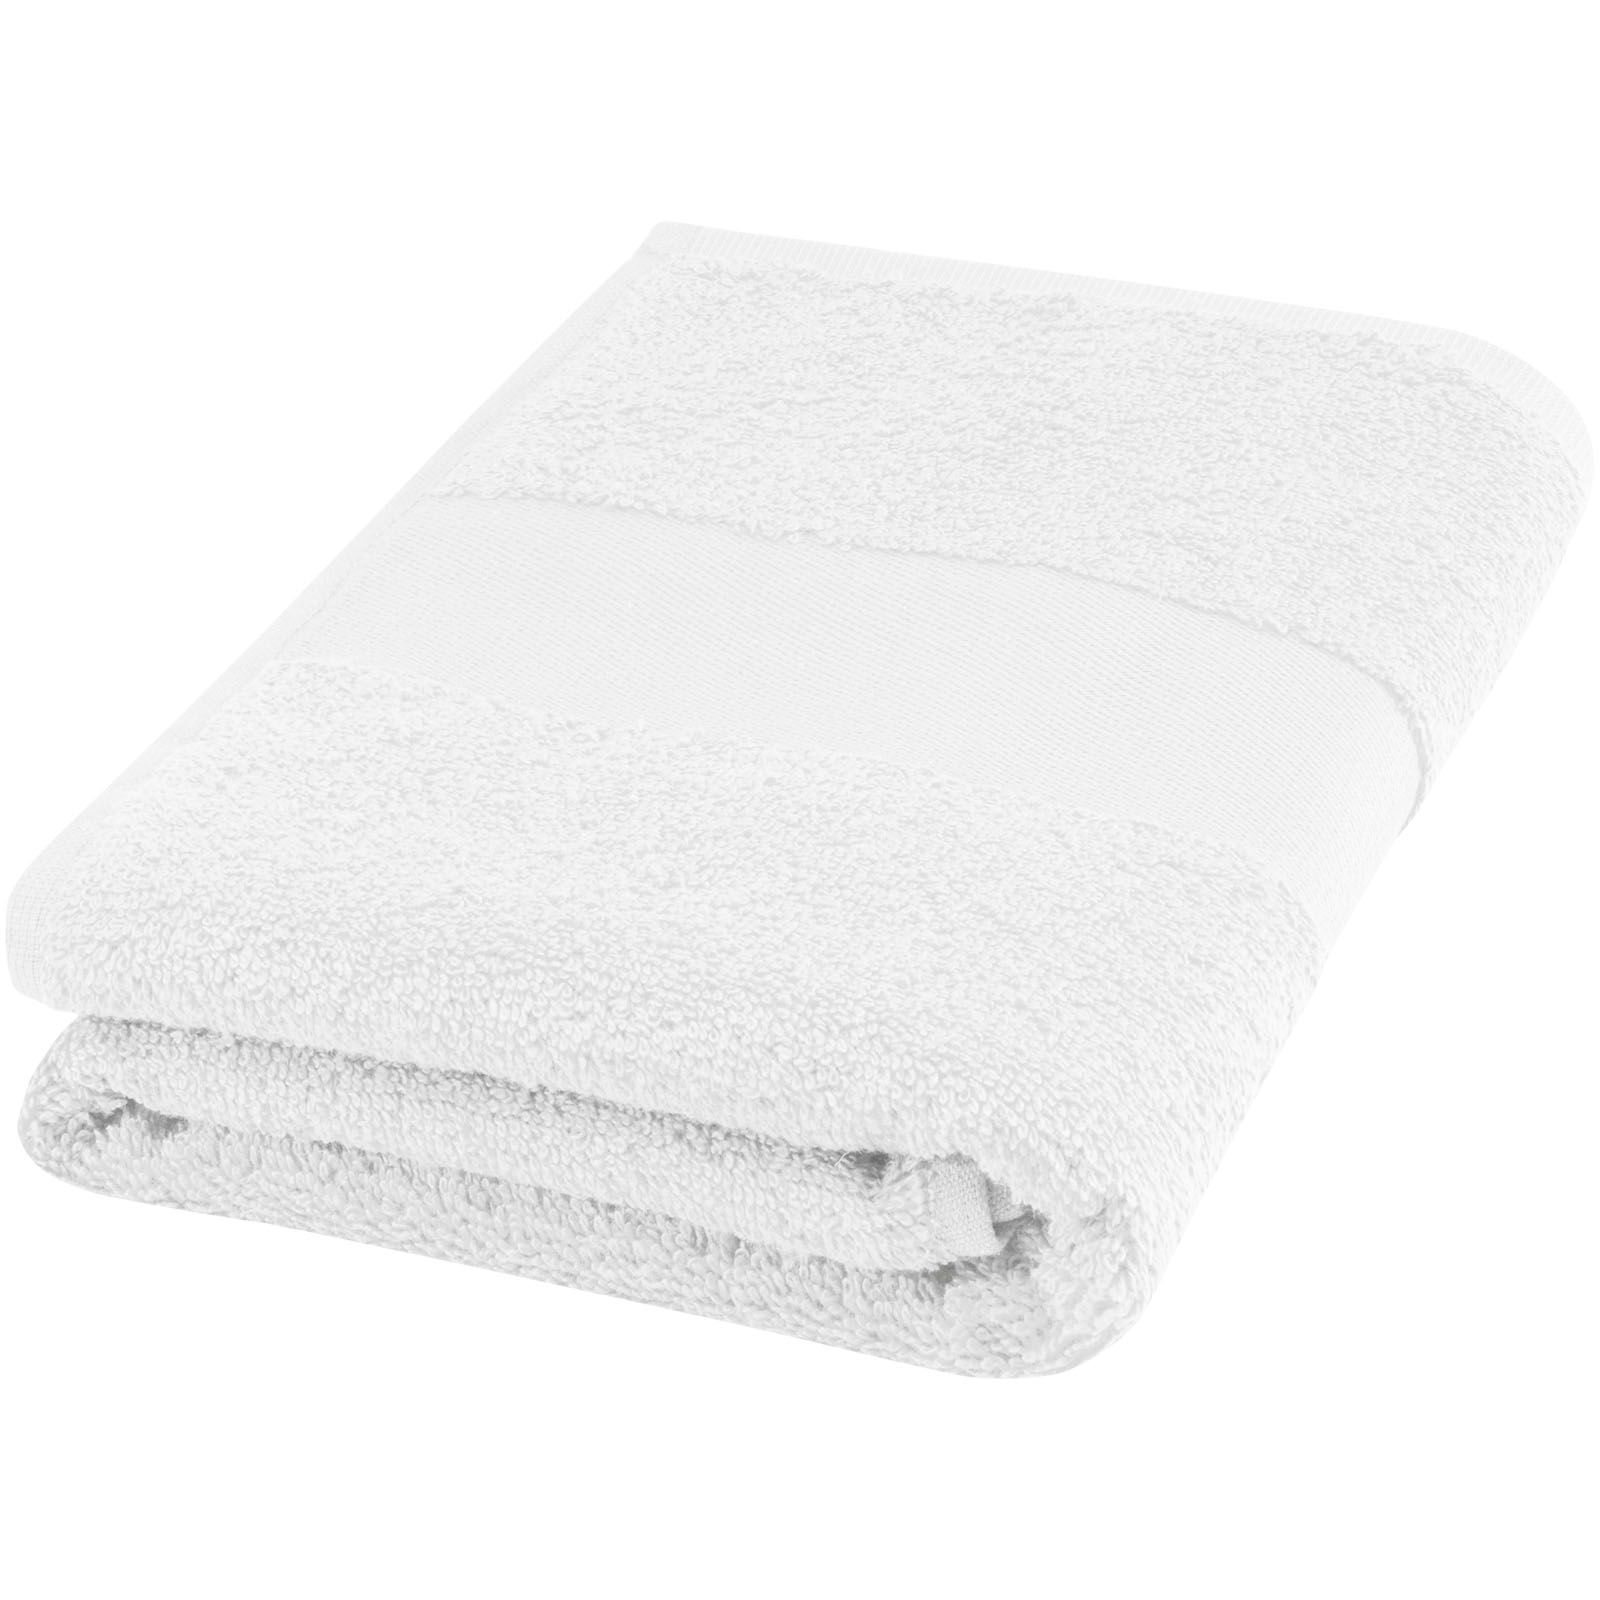 Advertising Towels - Charlotte 450 g/m² cotton towel 50x100 cm